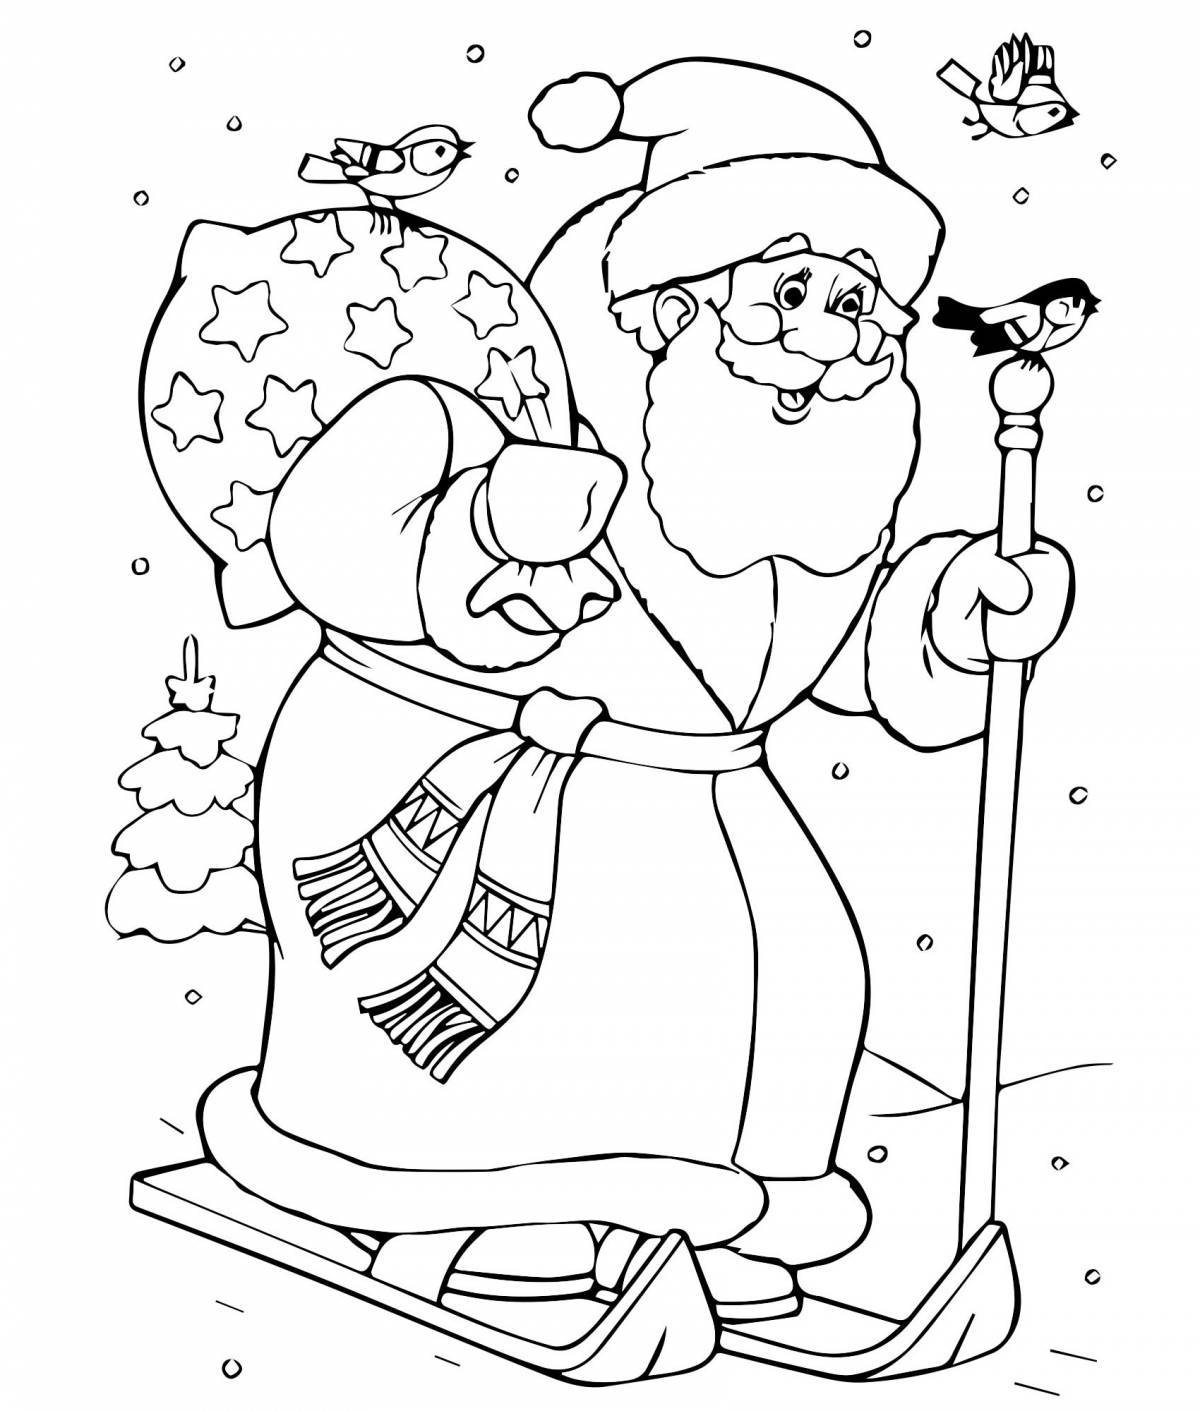 Sparkling Christmas drawings